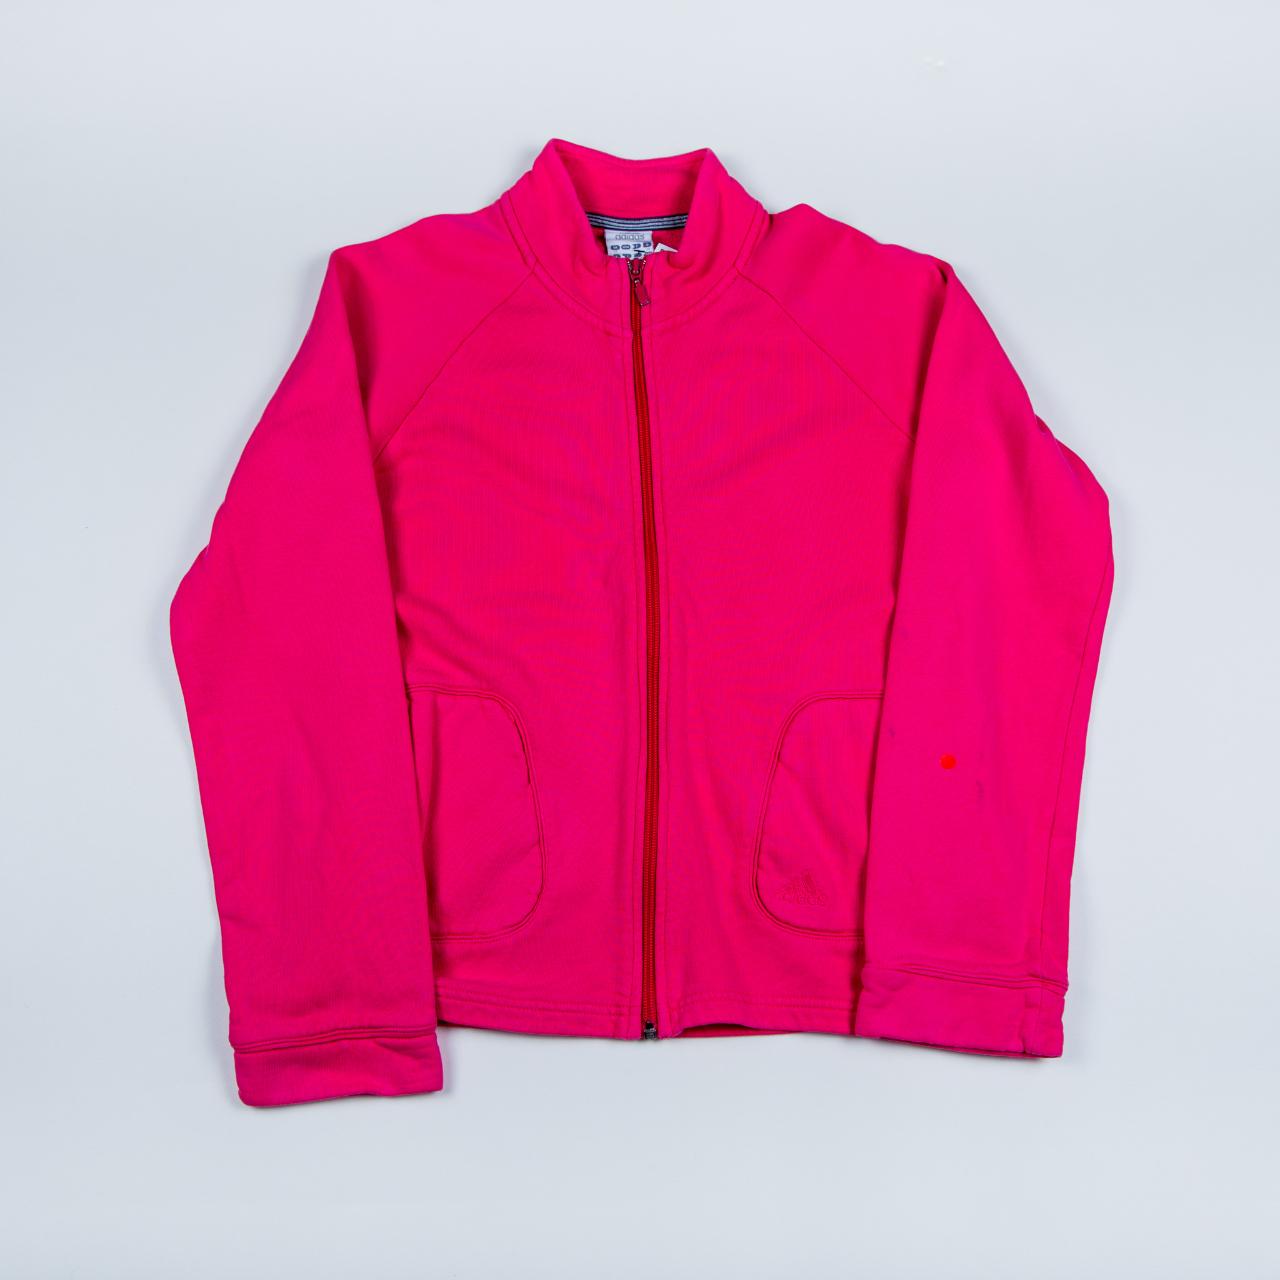 plain pink adidas zip up vintage sweatshirt //... - Depop